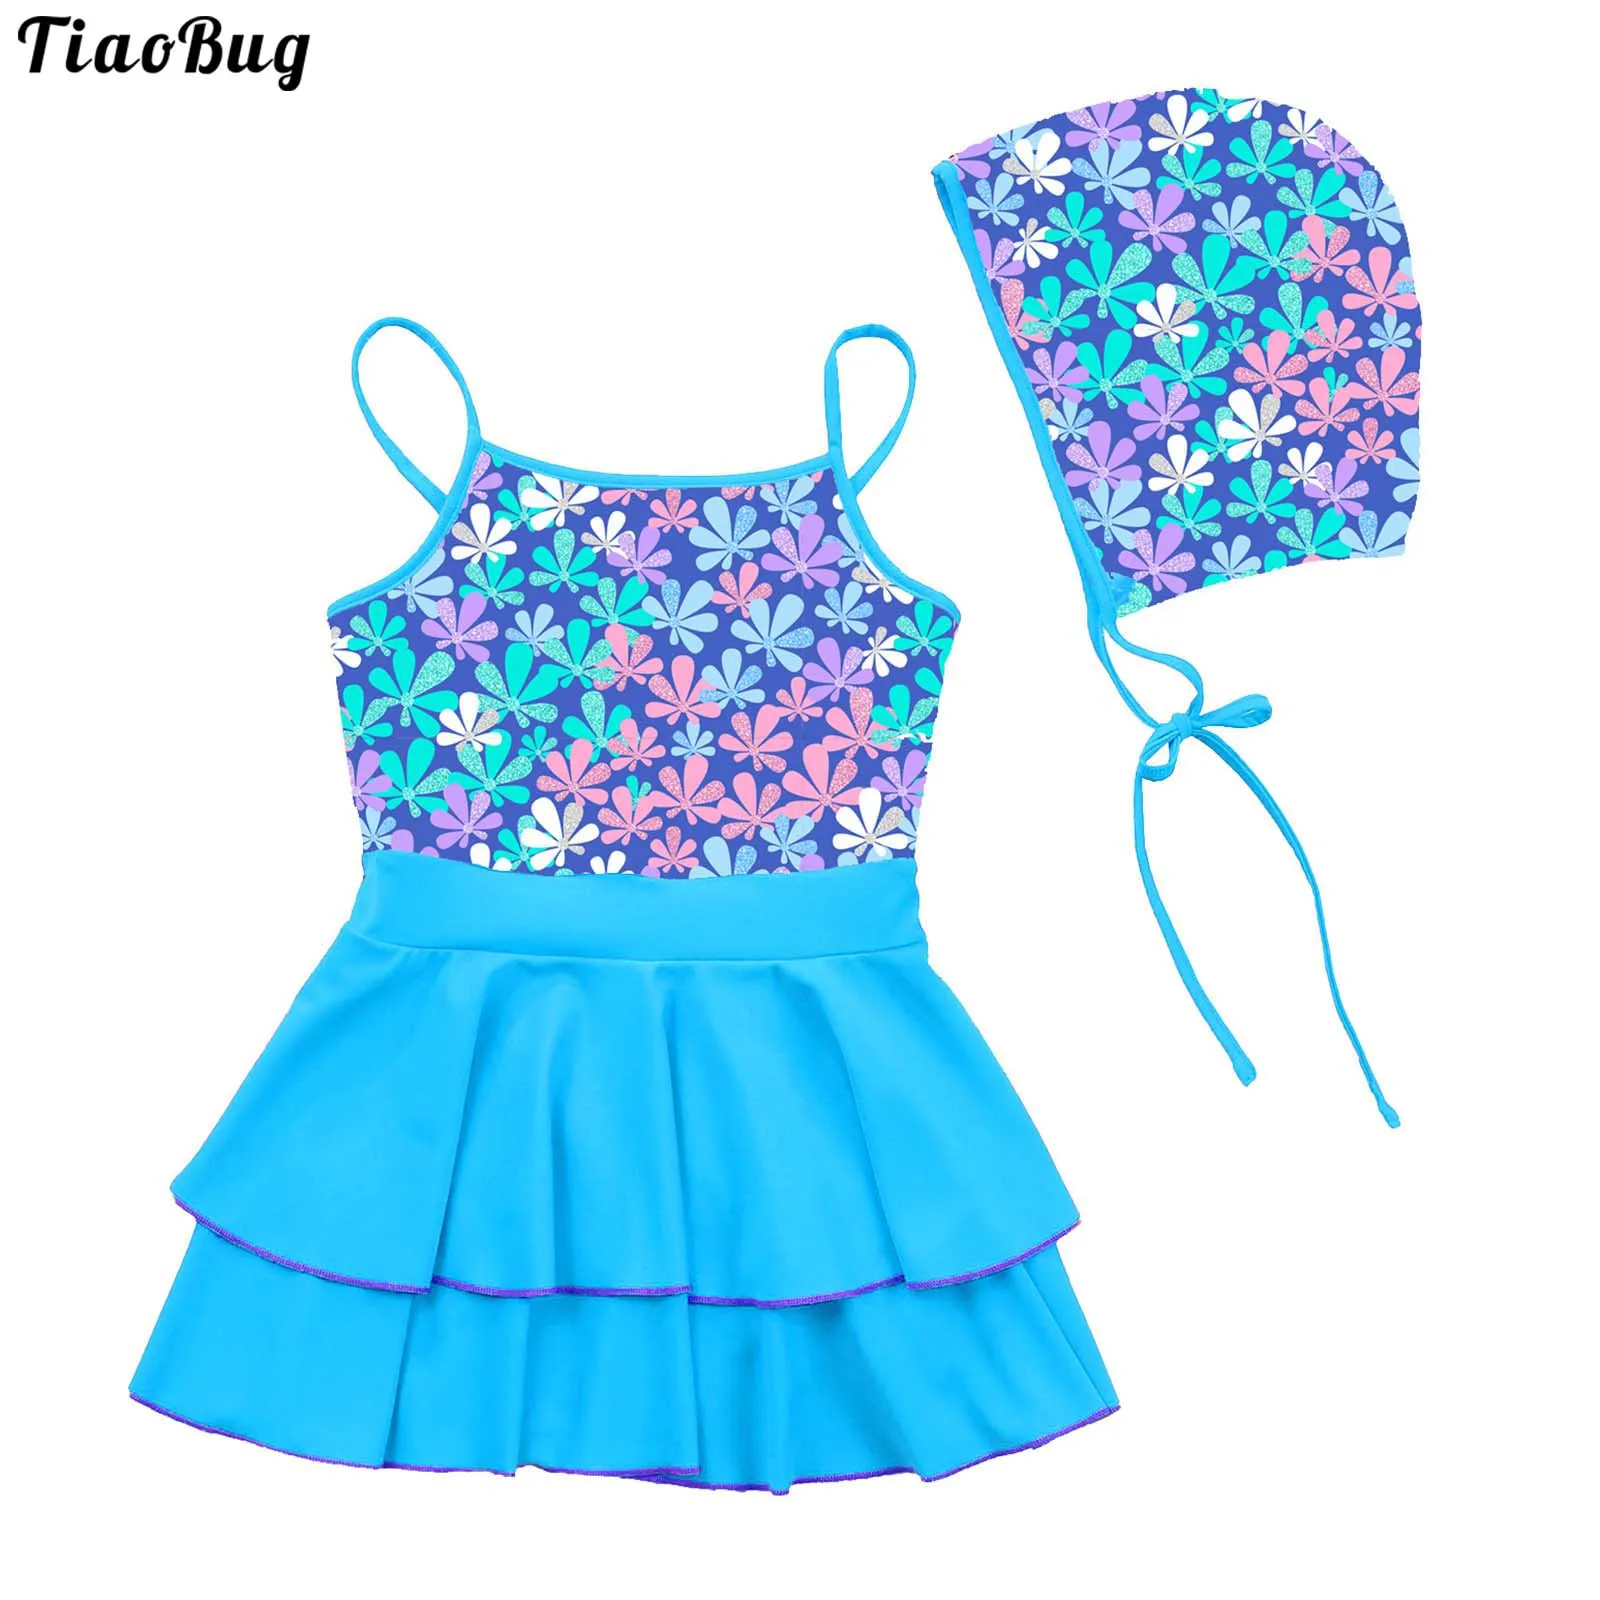 

TiaoBug Summer 2Pcs Kids Girls Swimming Suit Adjustable Straps Sleeveless Layered Dress With Hat Beach Bathing Pool Swimwear